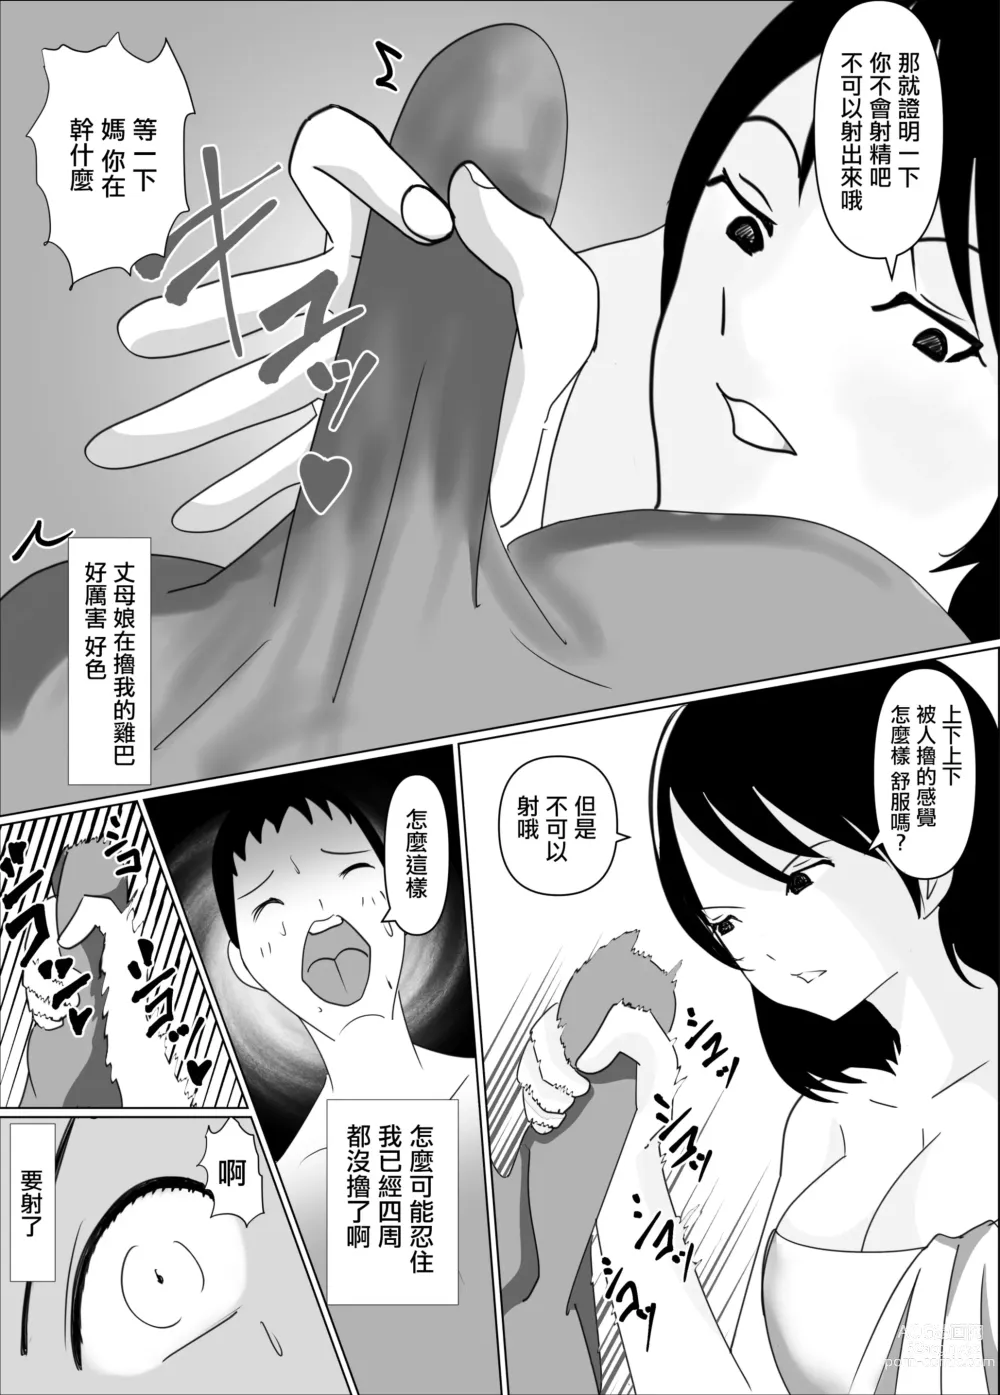 Page 6 of doujinshi 為了在妻子的排卵日授精而攢的精子被丈母娘看上了